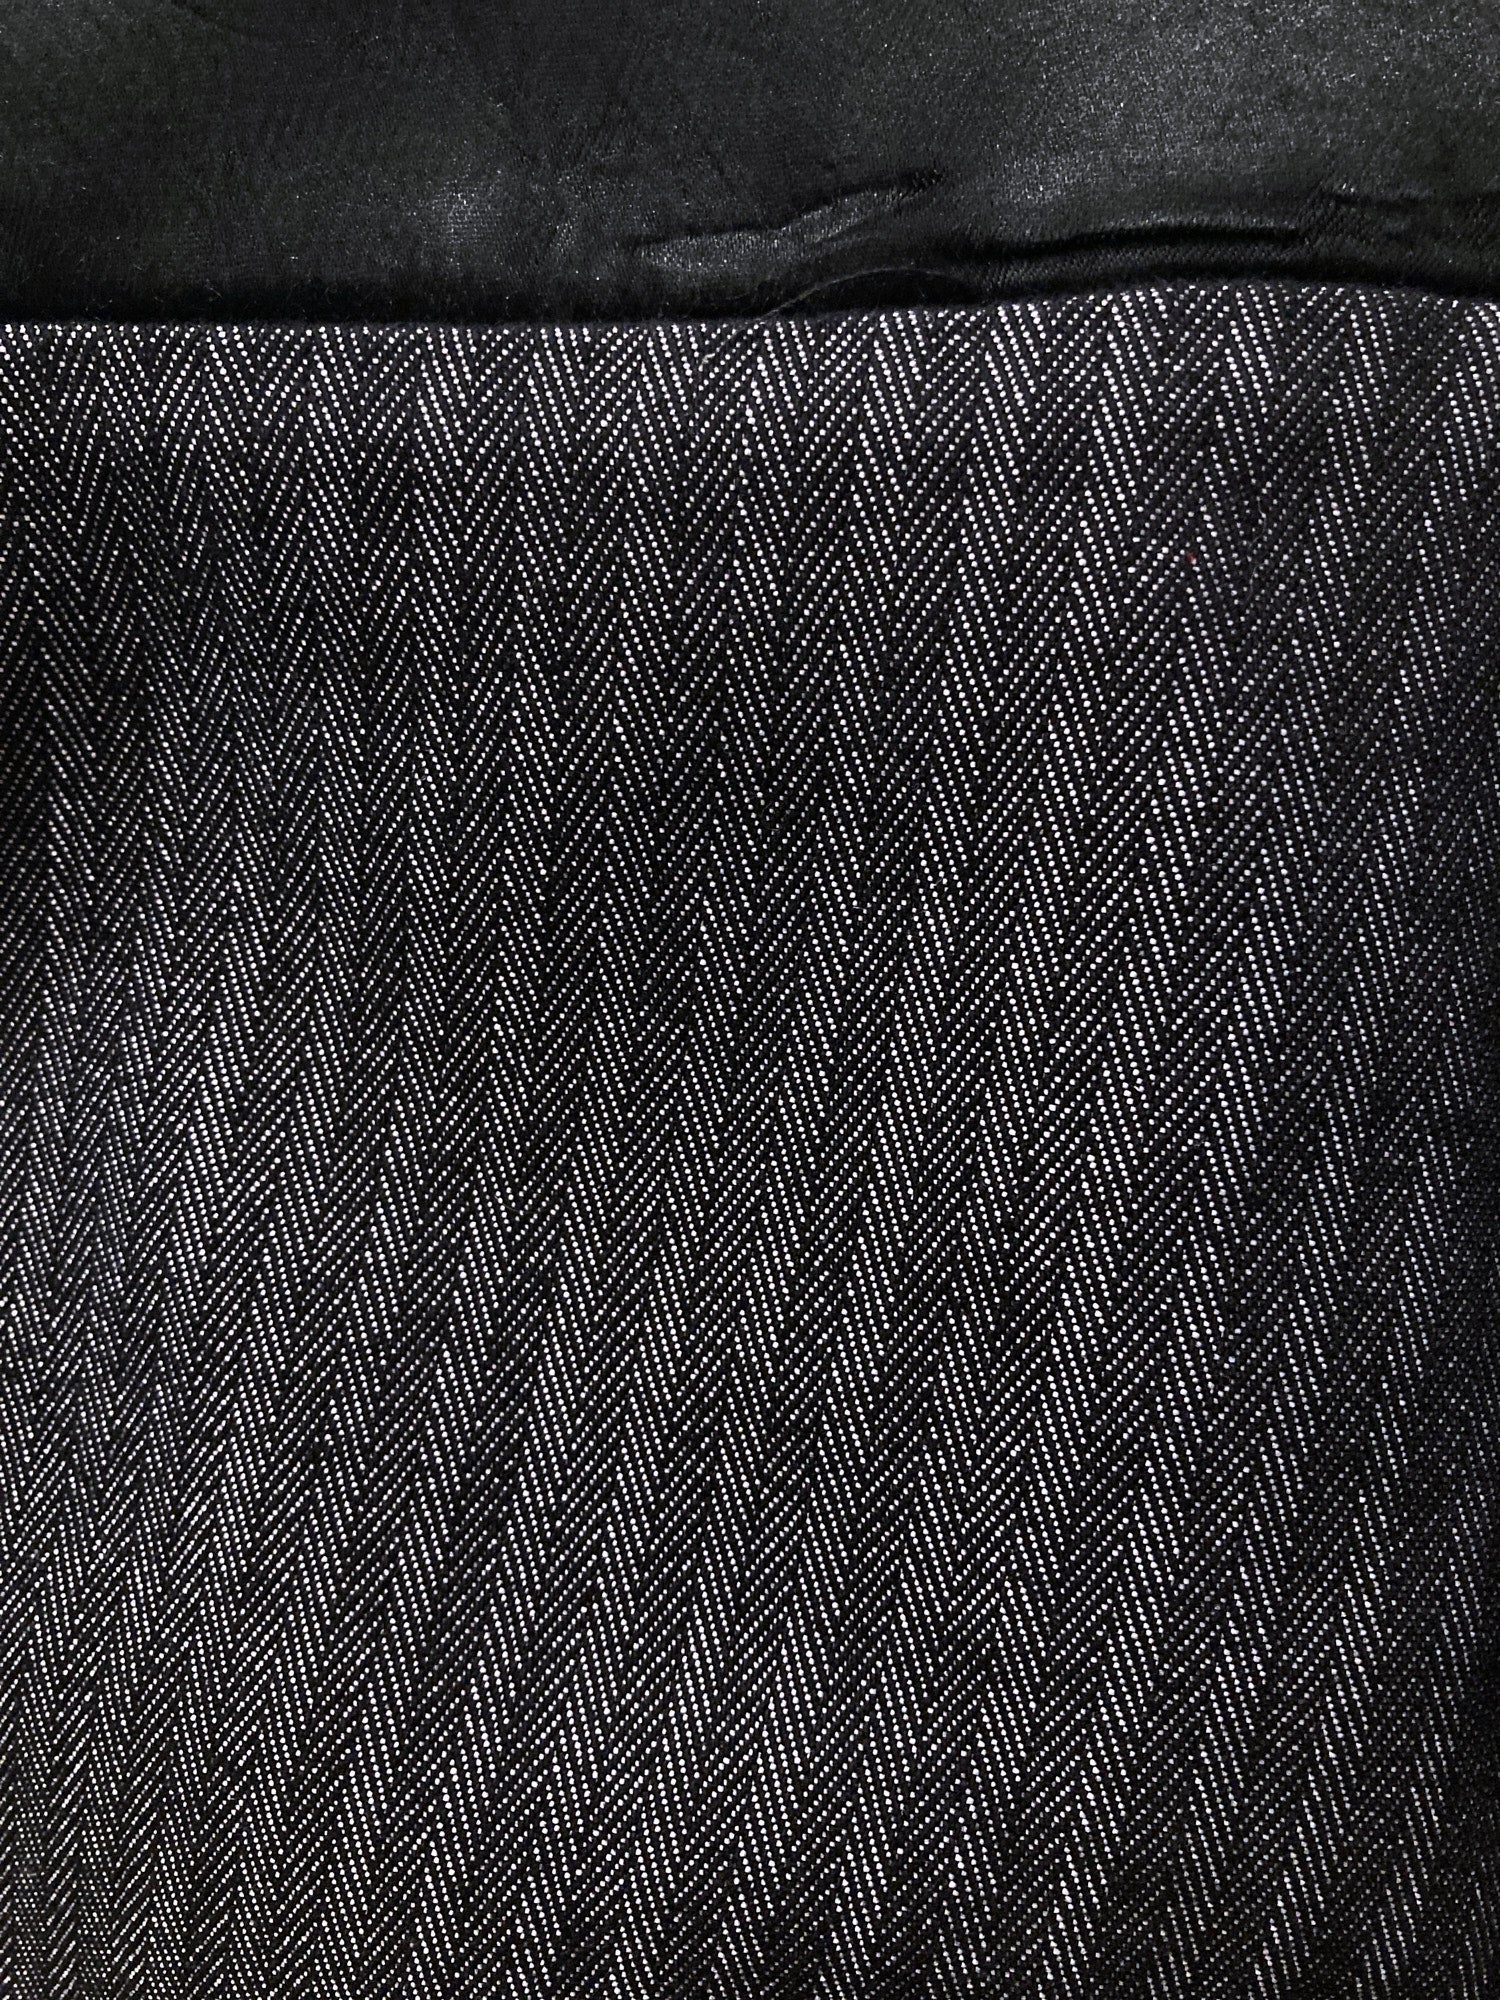 Jean Colonna grey herringbone contrast waistband trousers - size 38